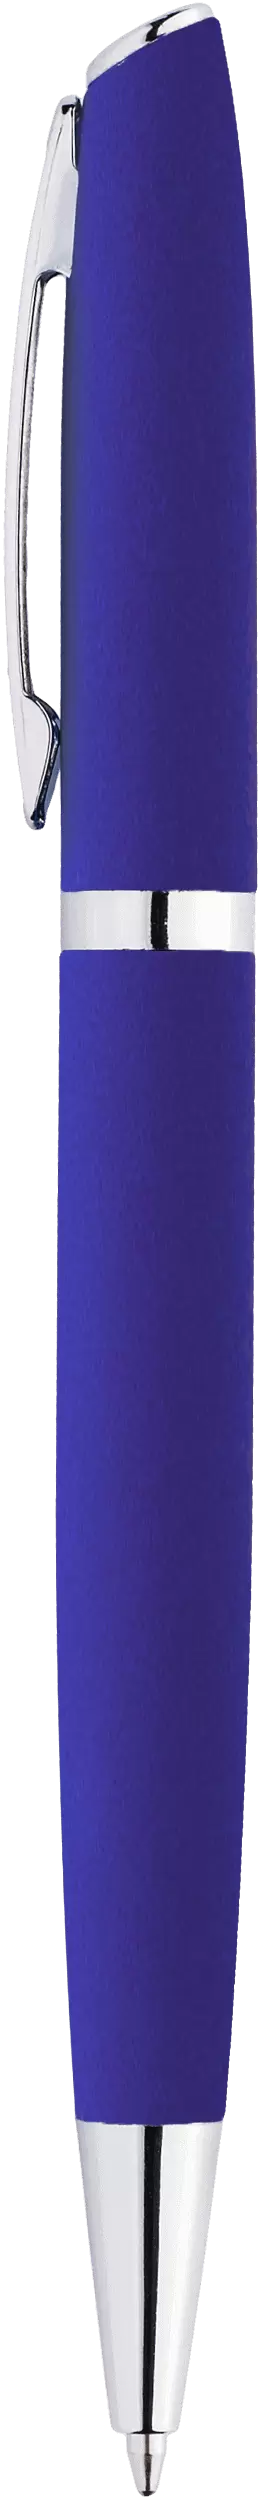 Ручка VESTA SOFT Синяя 1121-01NEW